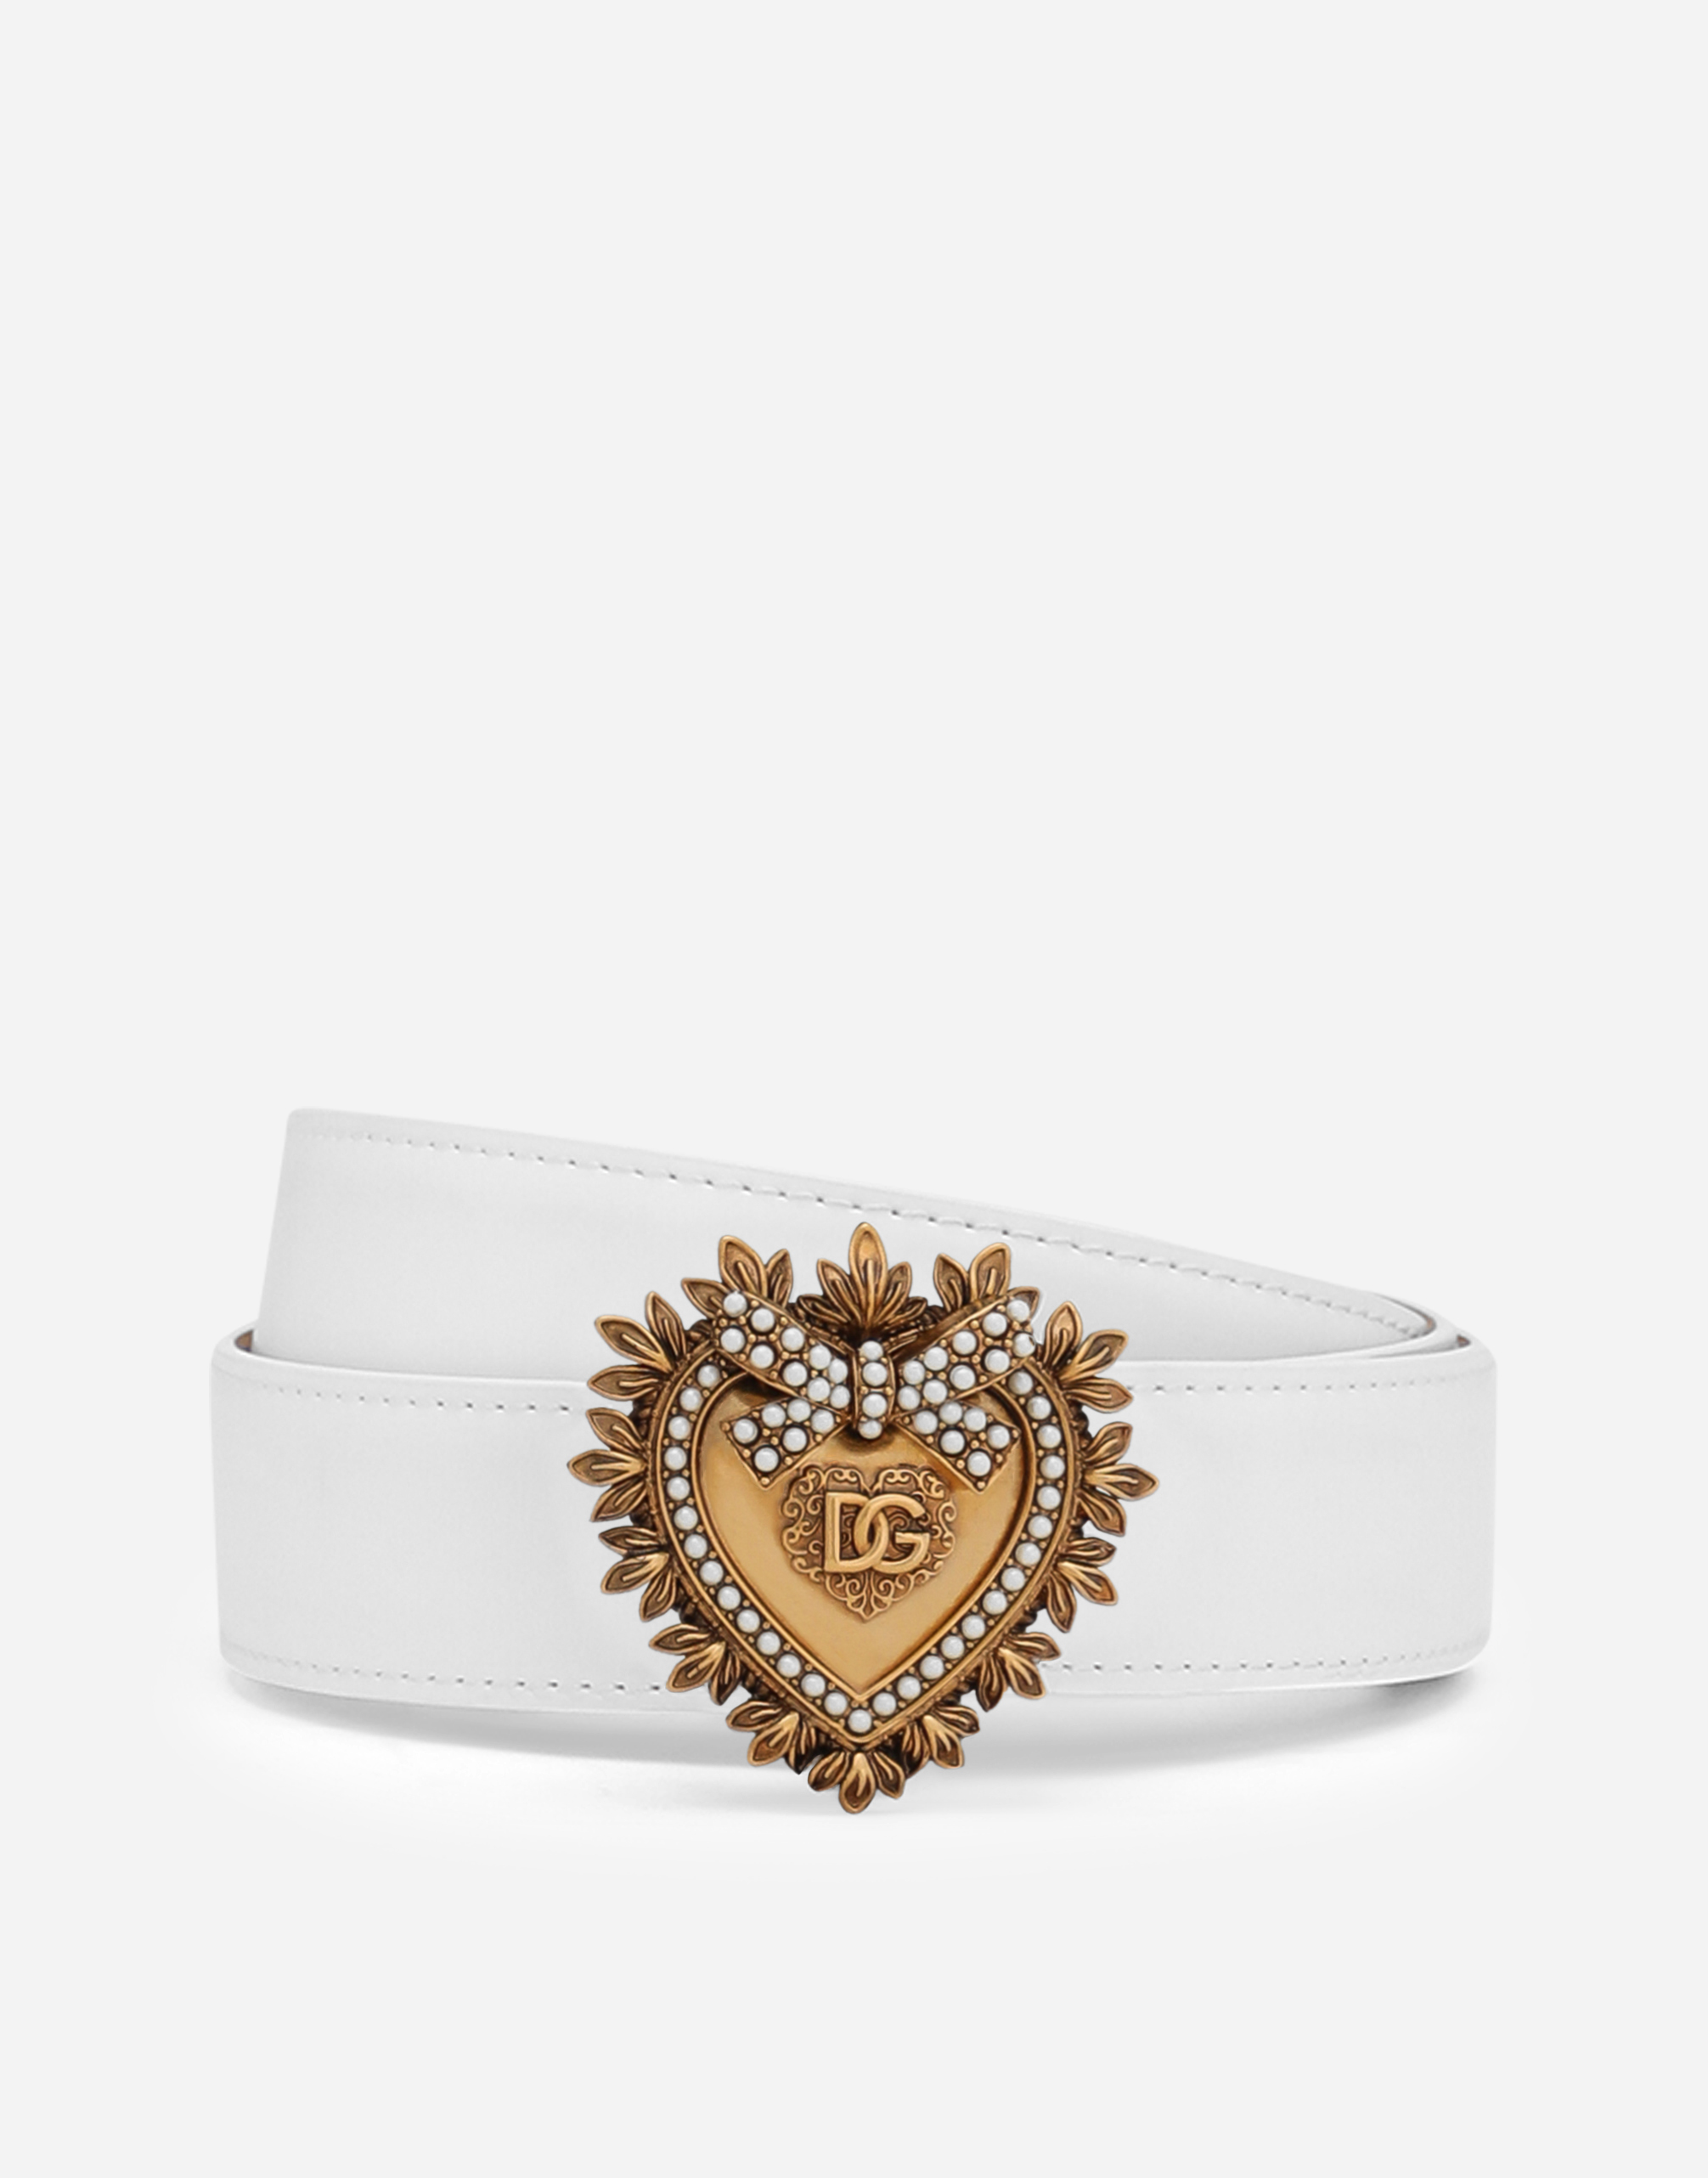 Dolce & Gabbana Leather Devotion Belt In White